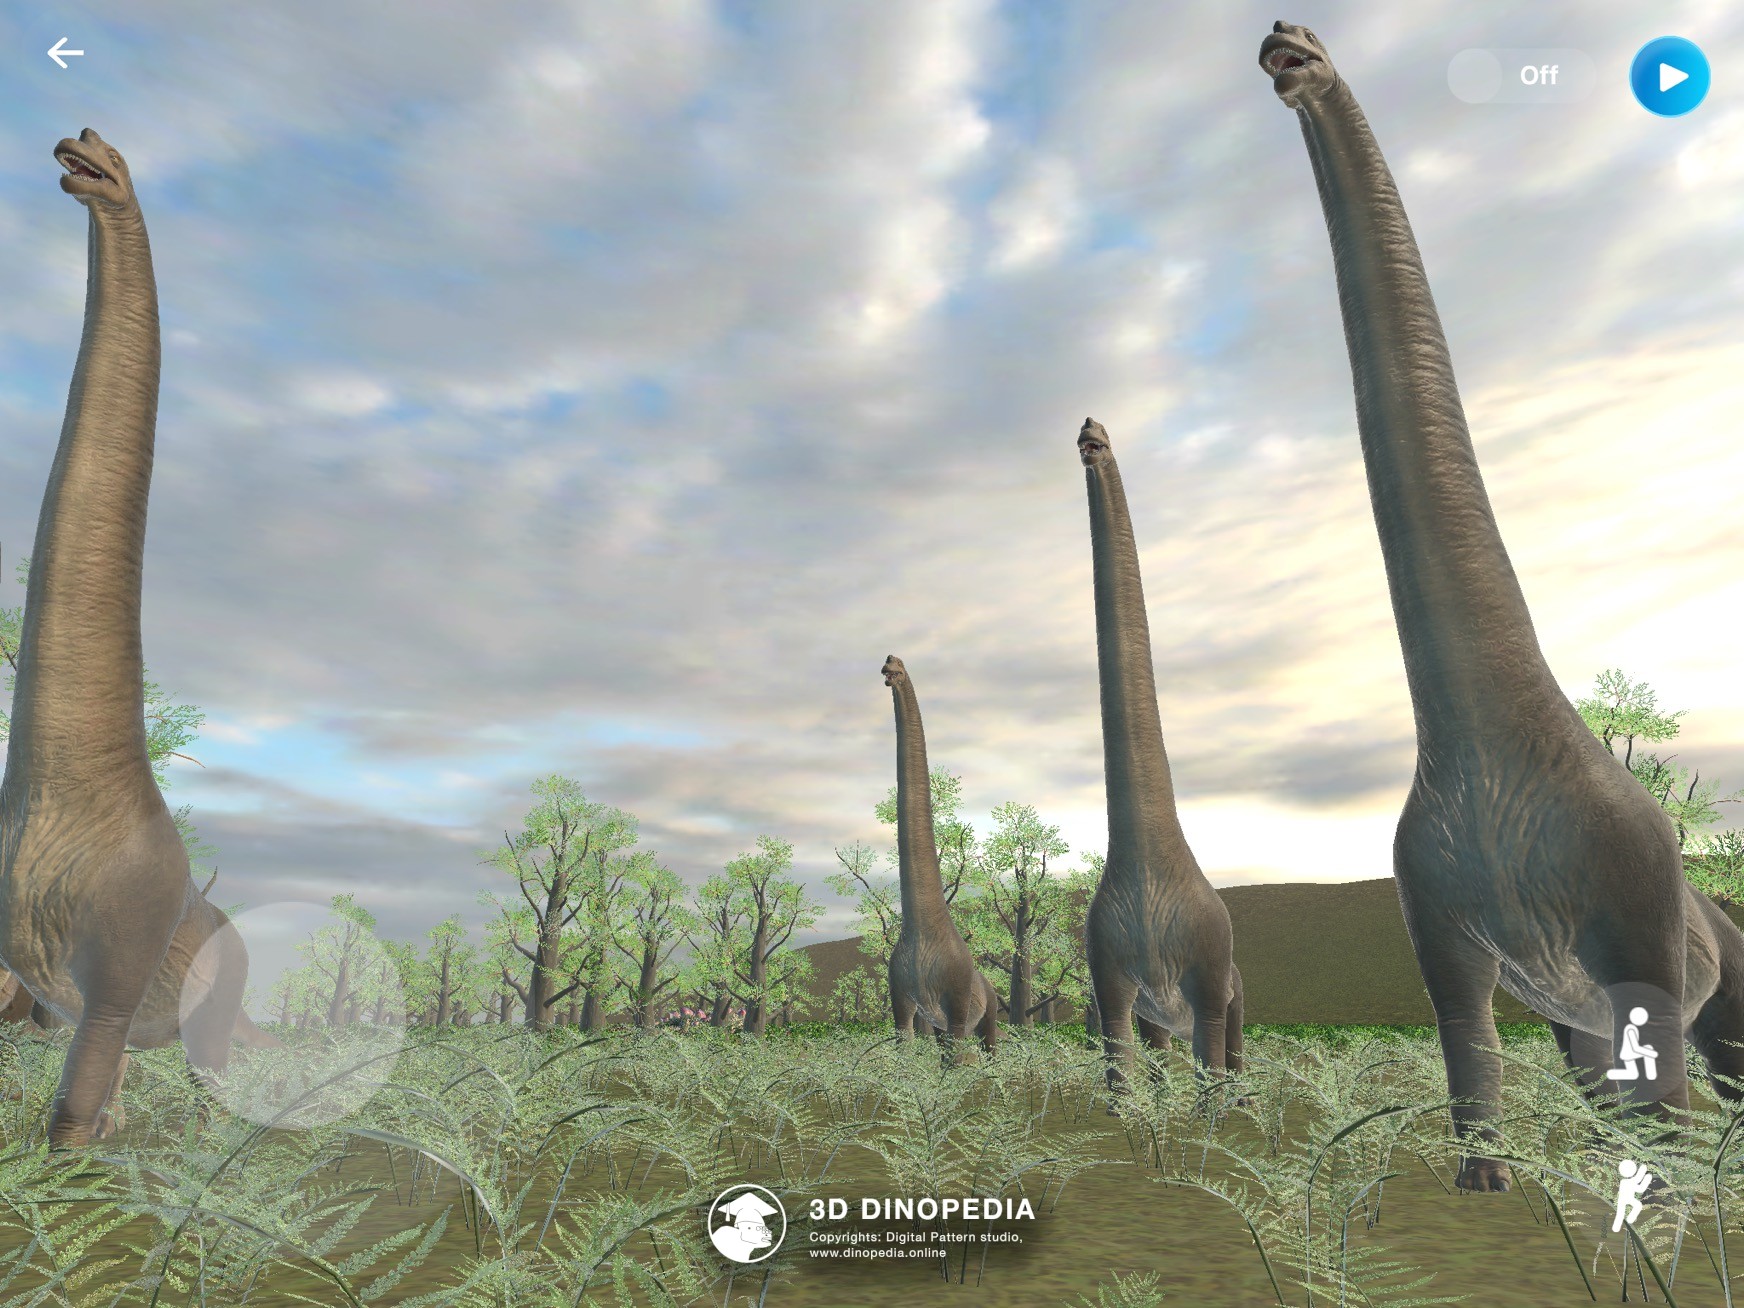 3D Dinopedia New Biomes: Triassic and Jurassic!